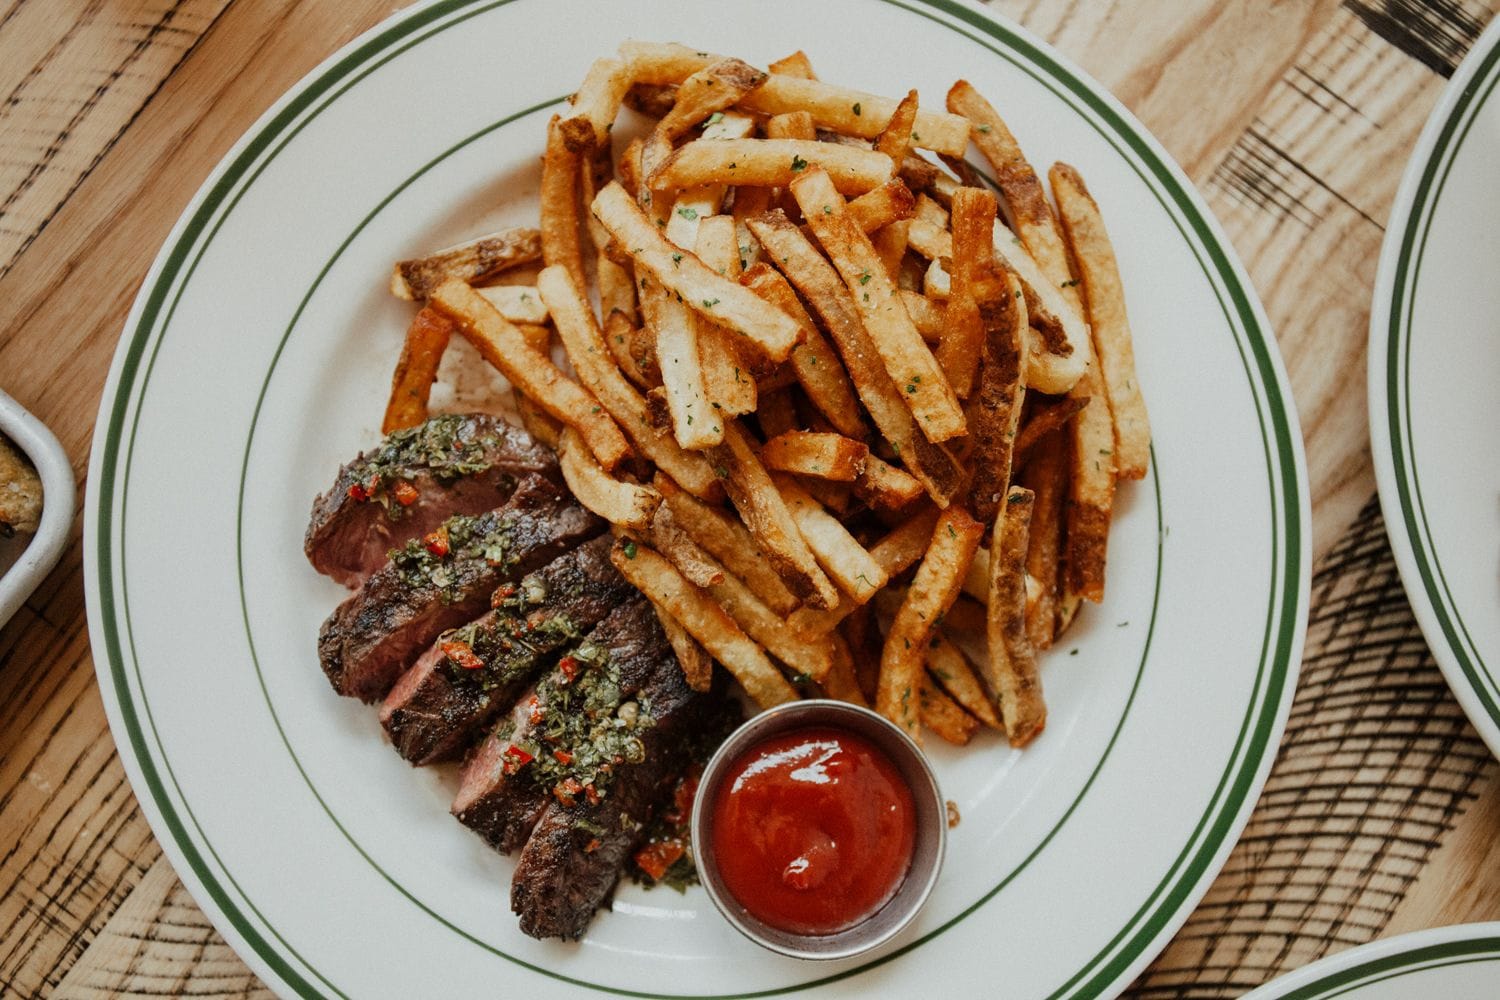 Steak frites at Provender Hall